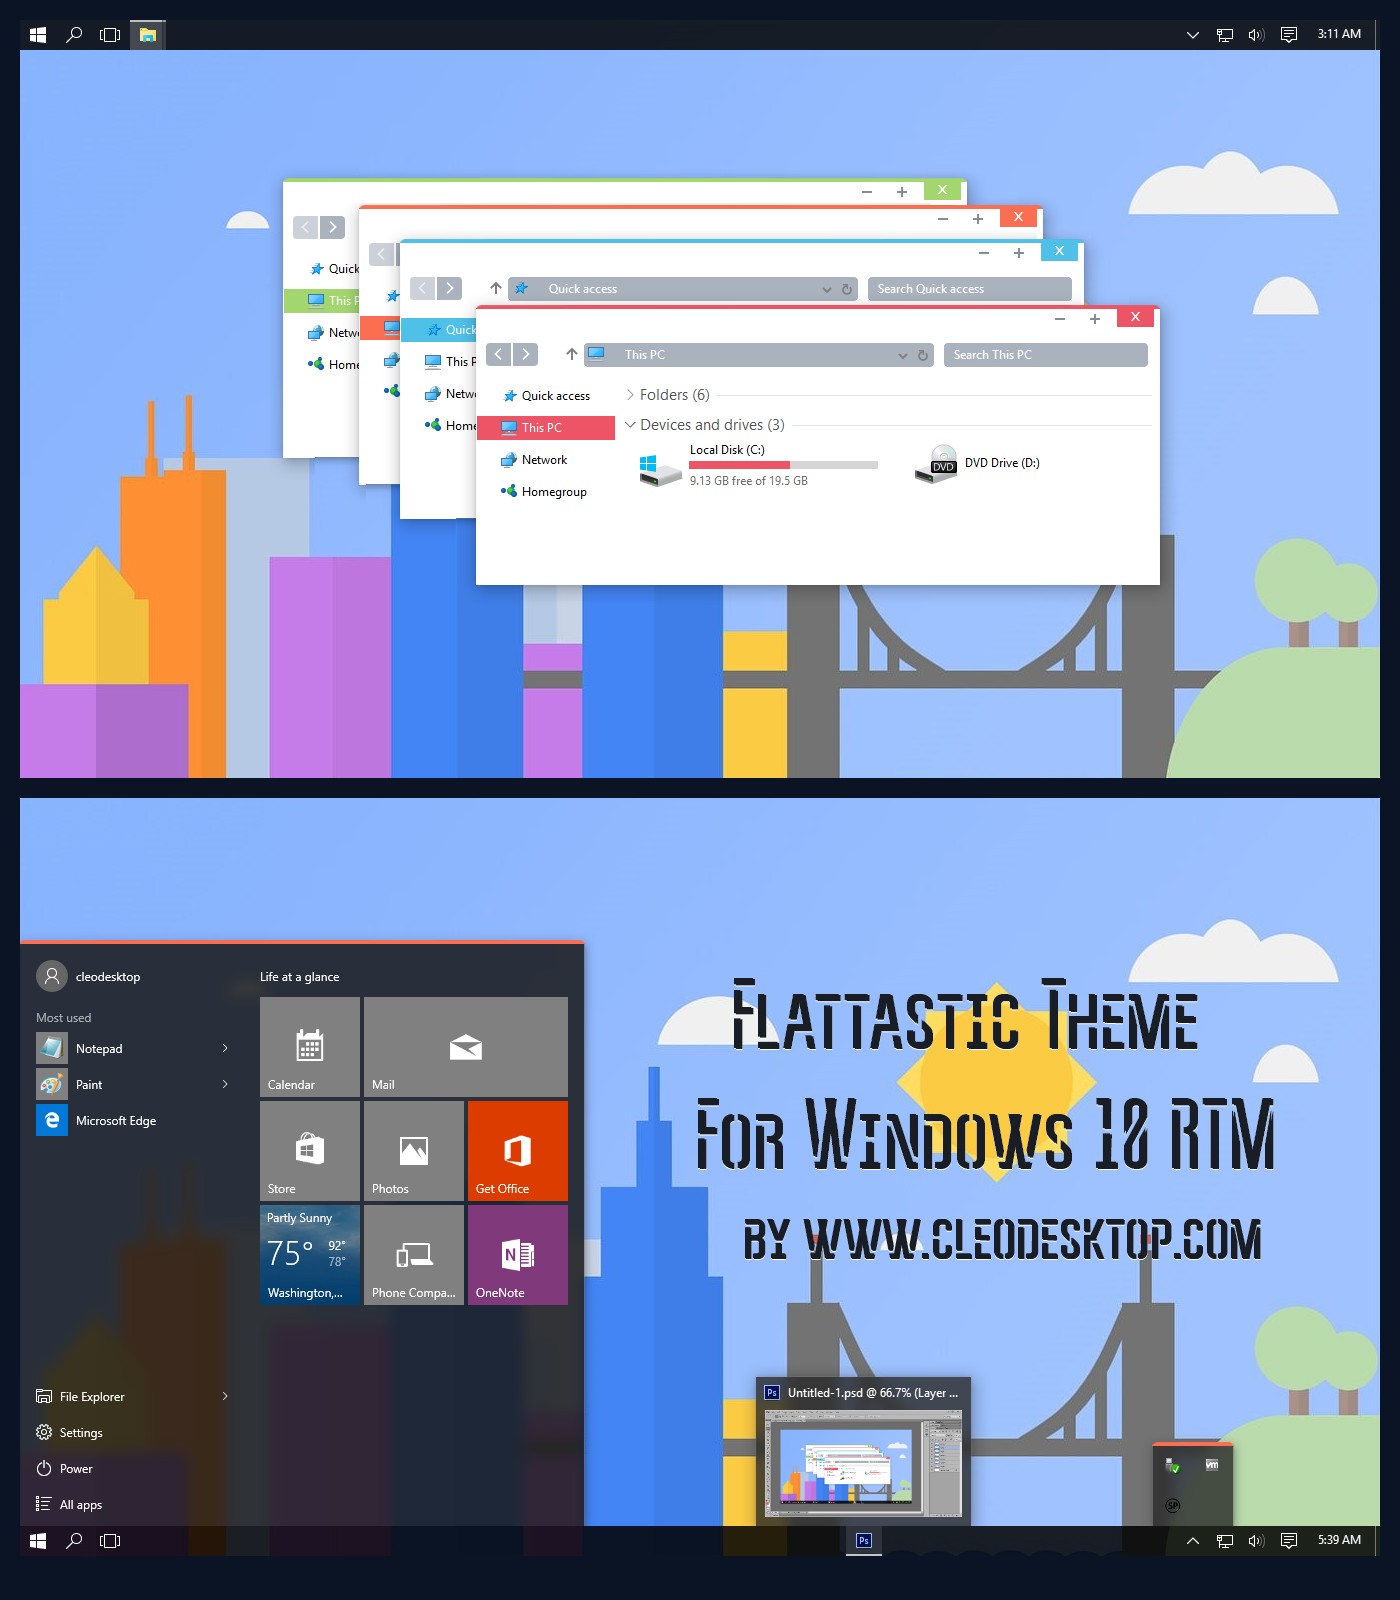 Flattastic Theme For Windows 10 RTM